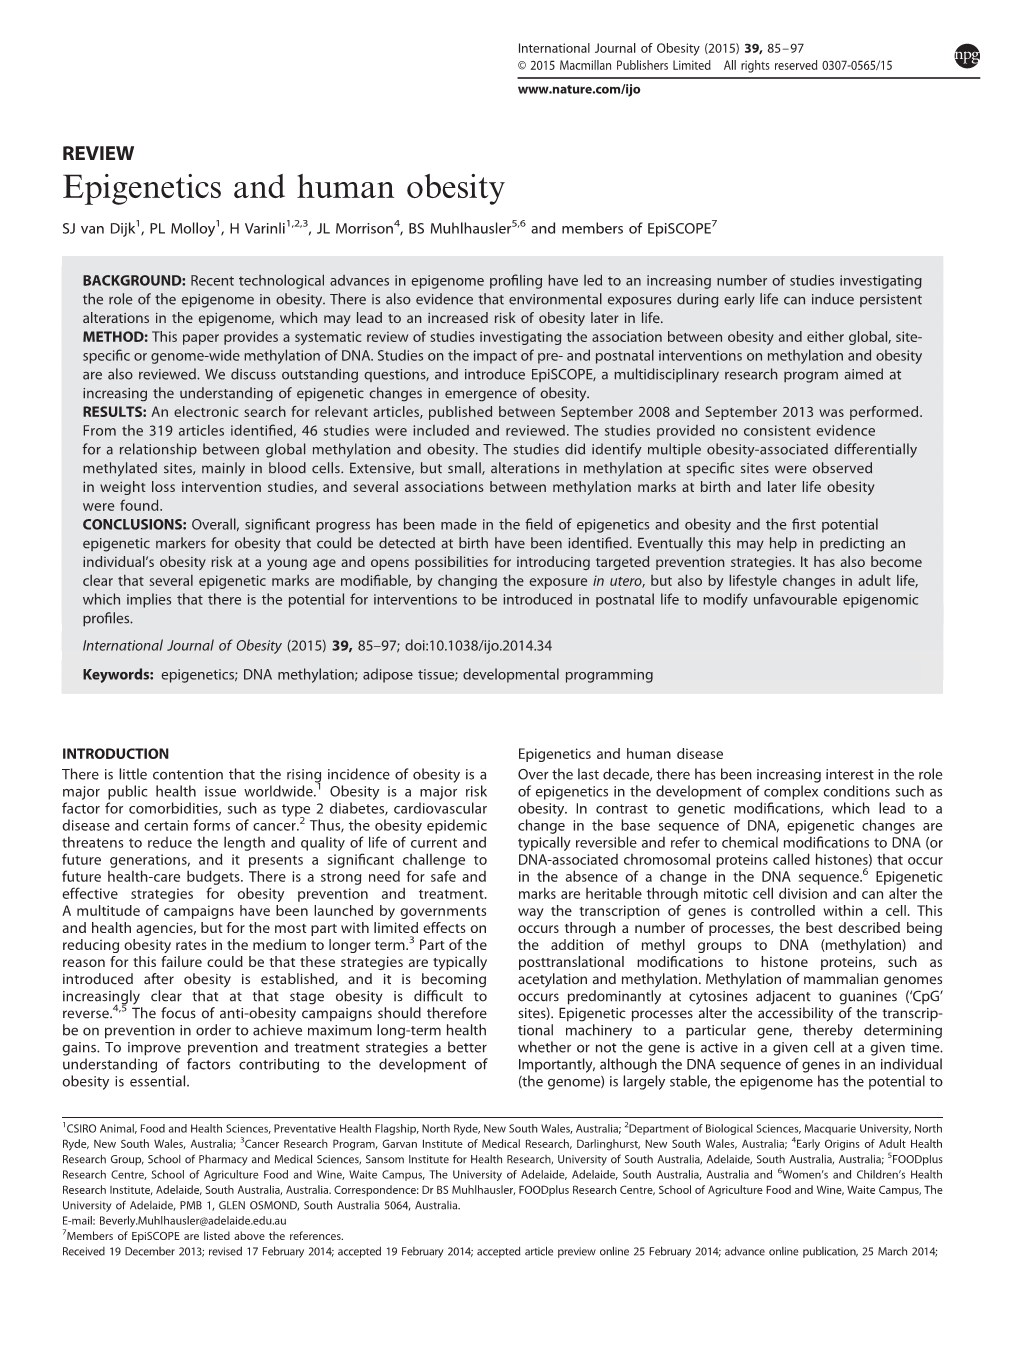 Epigenetics and Human Obesity